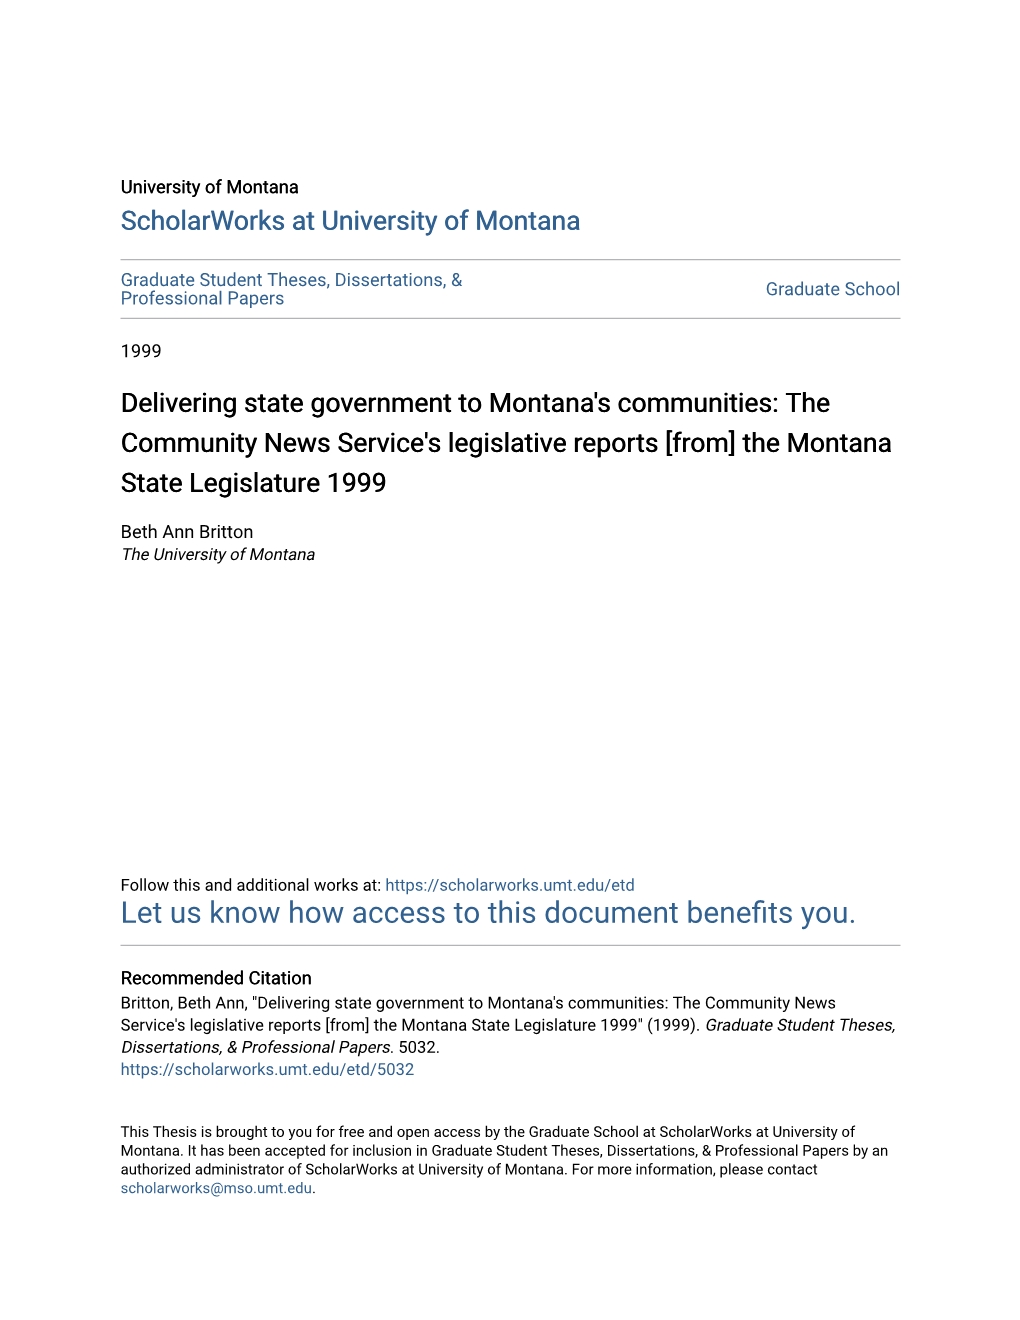 The Community News Service's Legislative Reports [From] the Montana State Legislature 1999